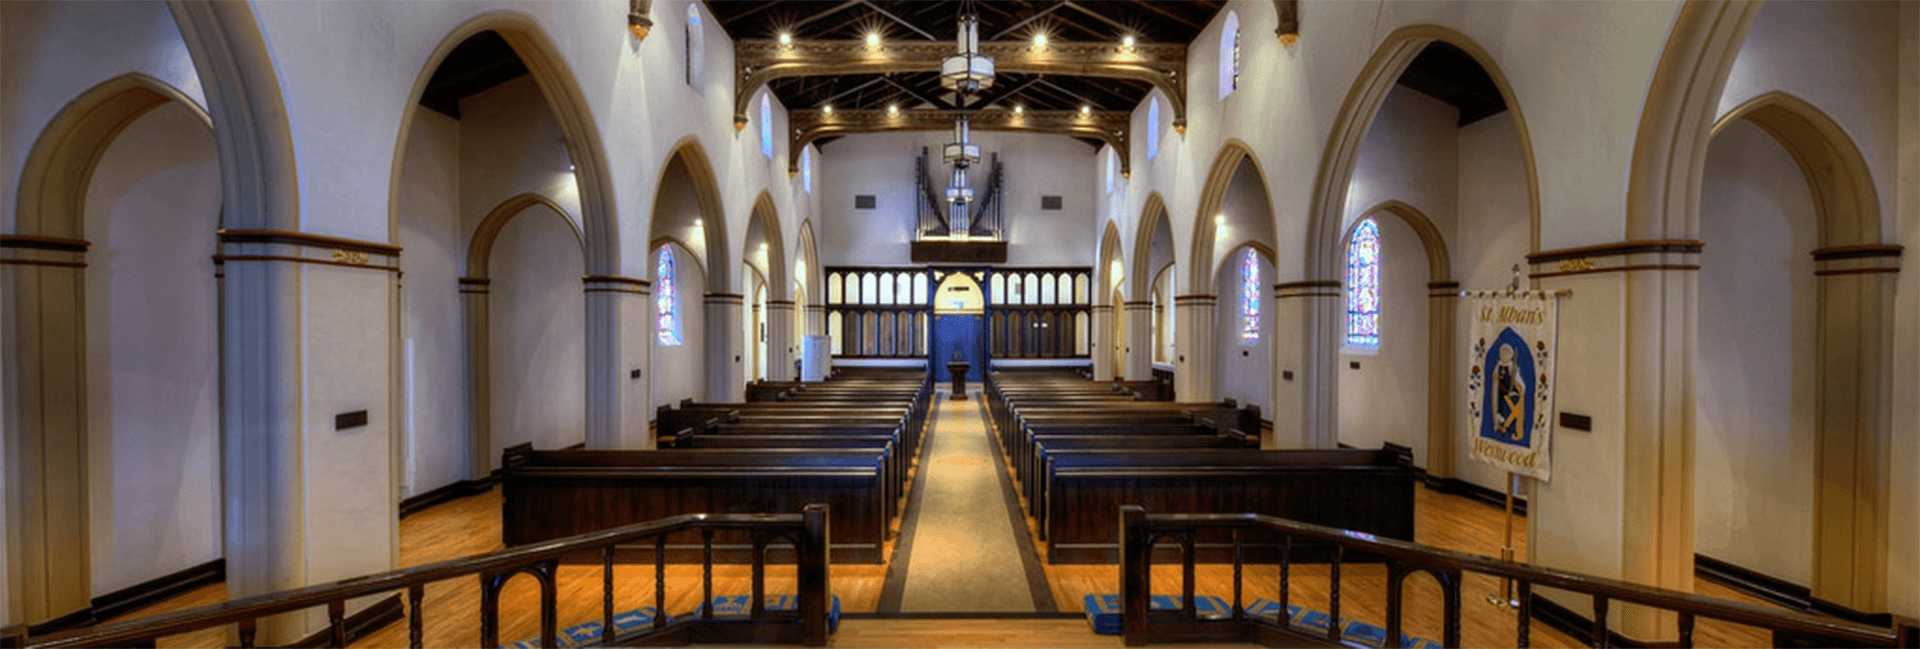 St. Alban's Episcopal Church Westwood, CA